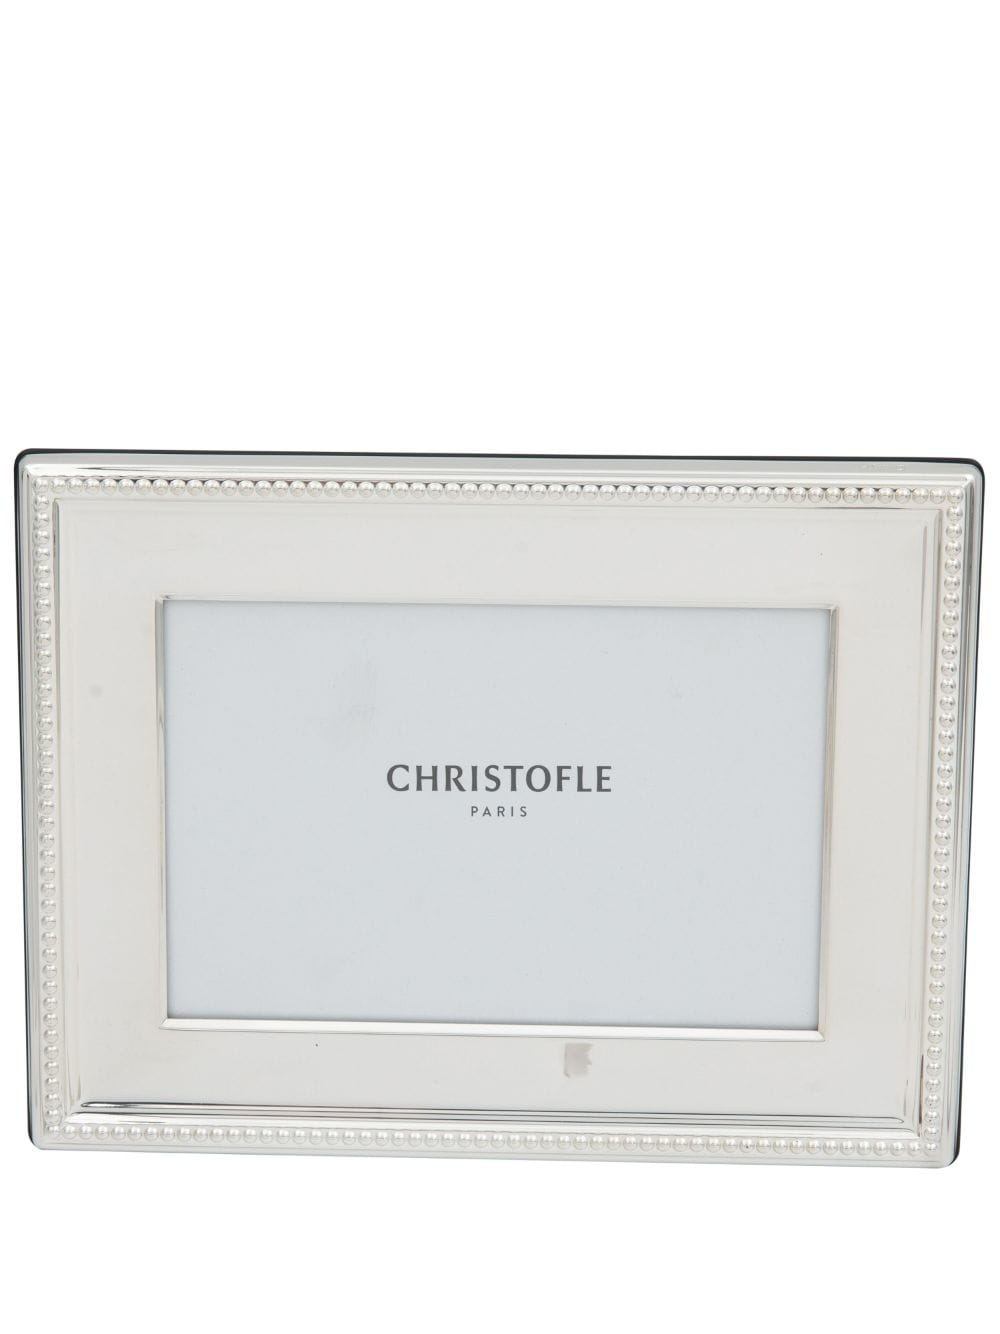 Christofle Perles picture frame - Silver von Christofle